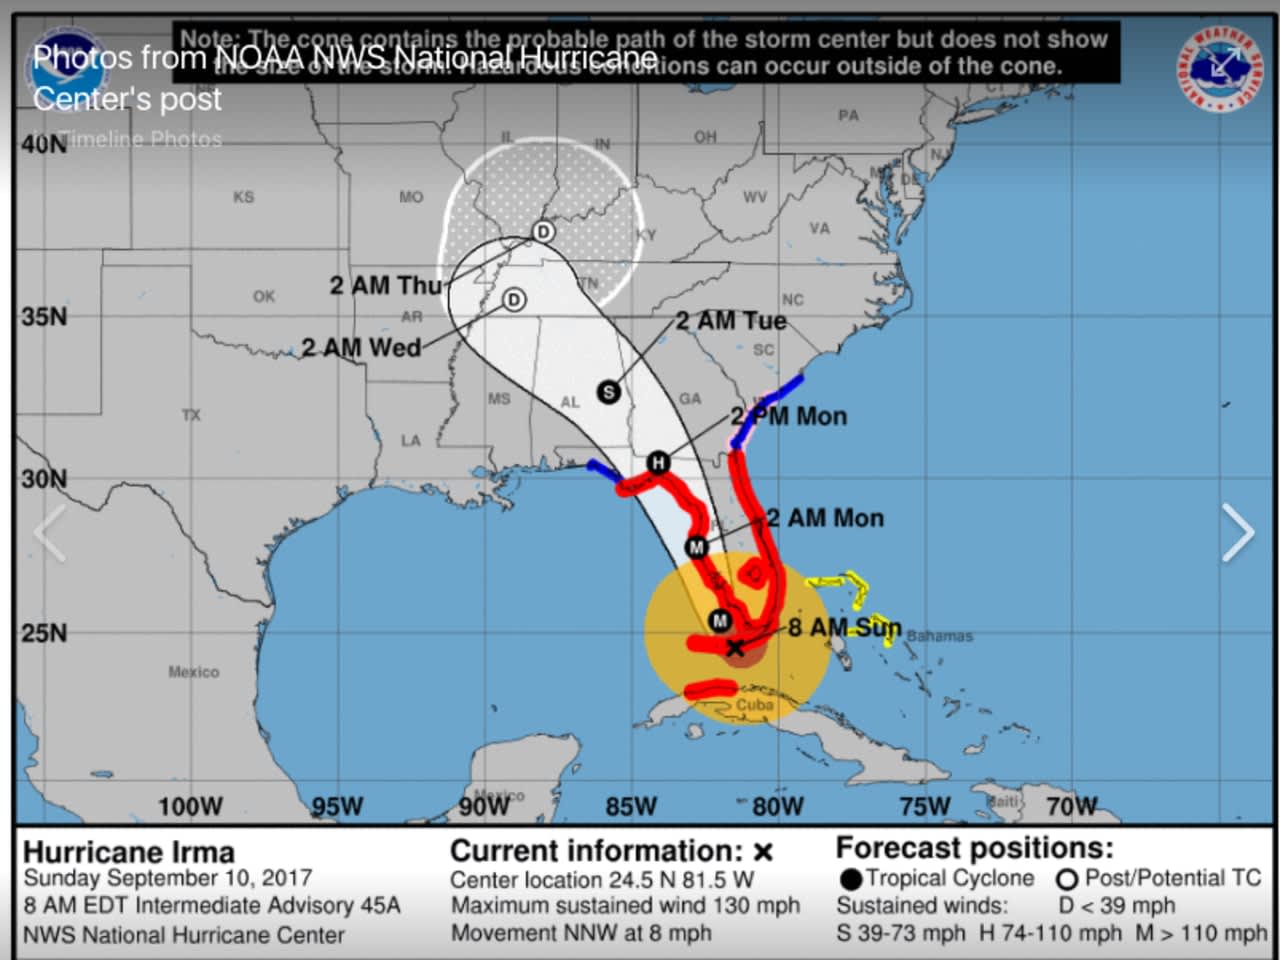 Updated forecast path for Hurricane Irma.